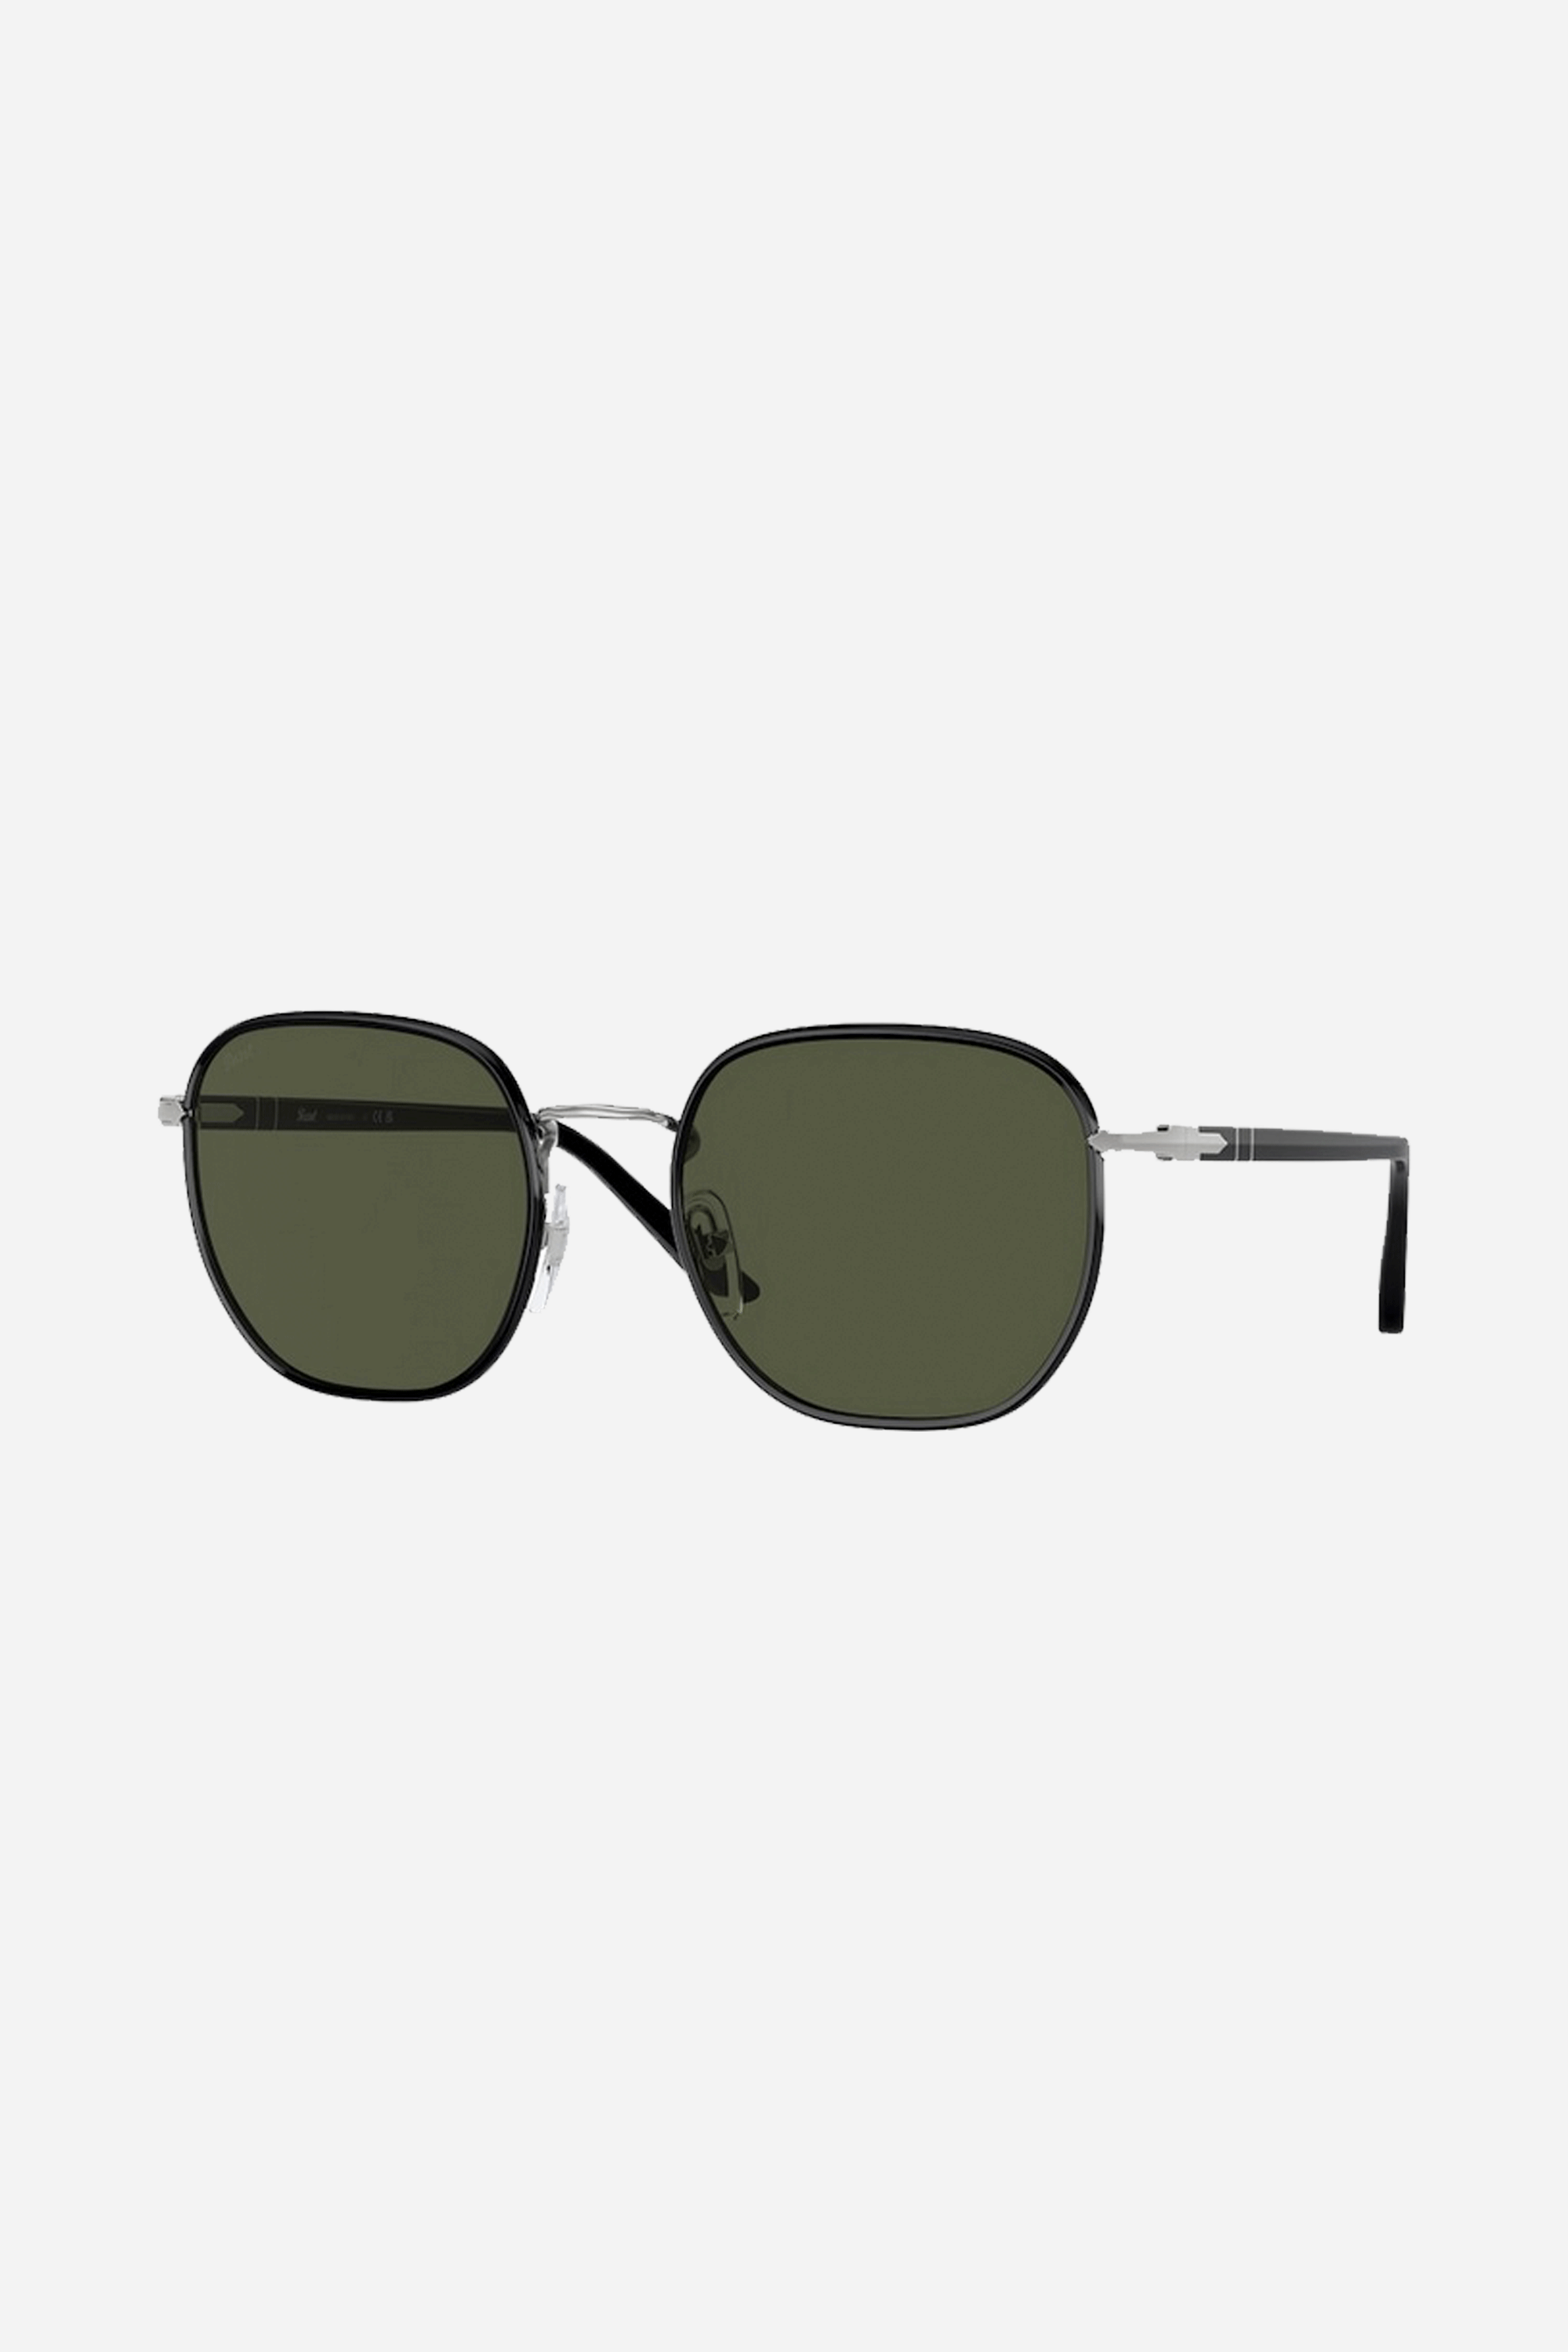 Persol round brown sunglasses - Eyewear Club